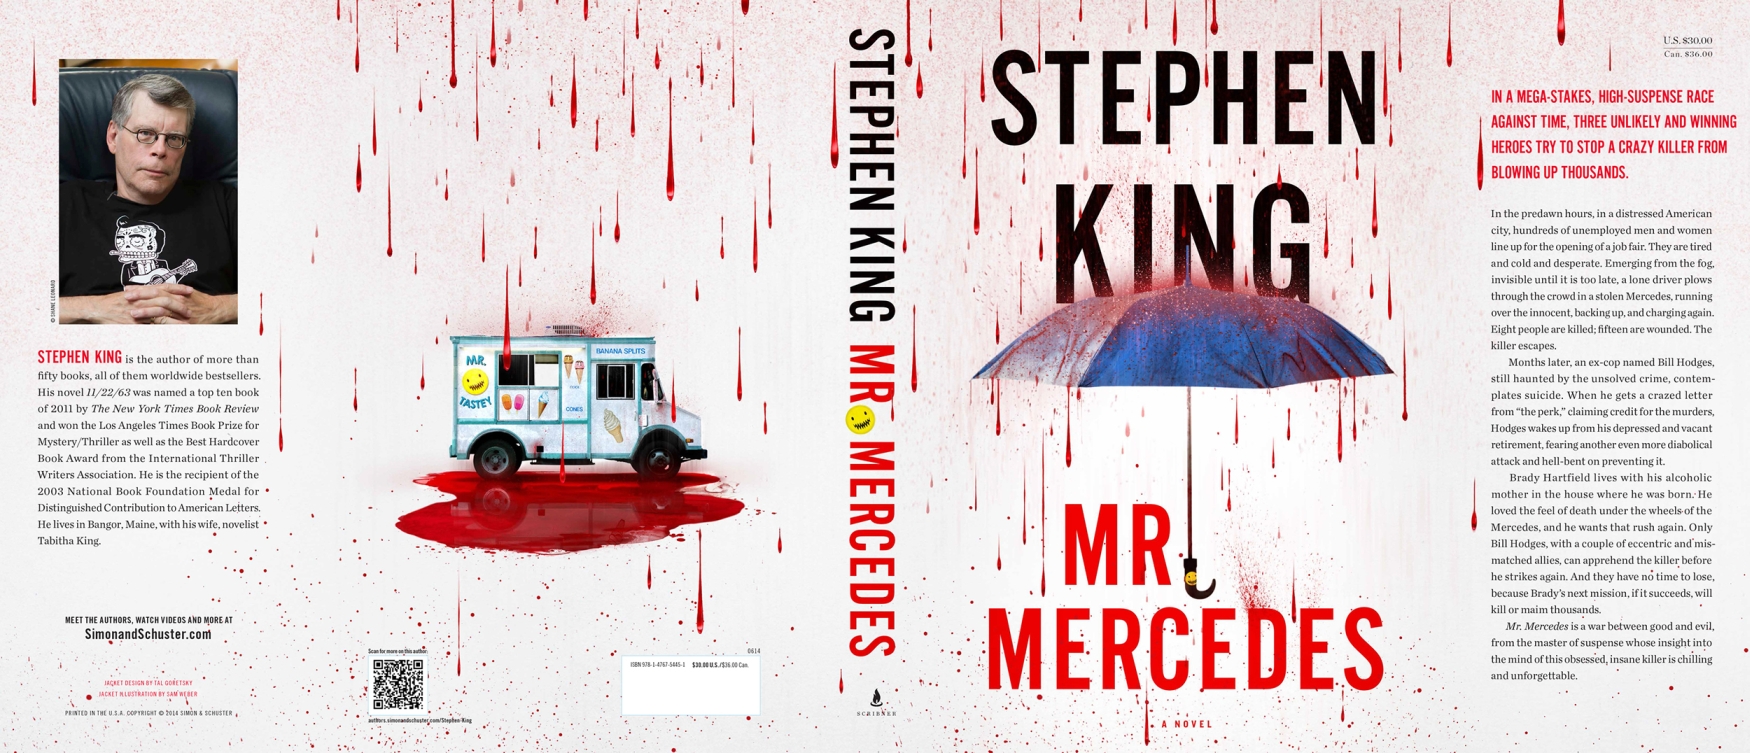 Stephen king mr mercedes #1